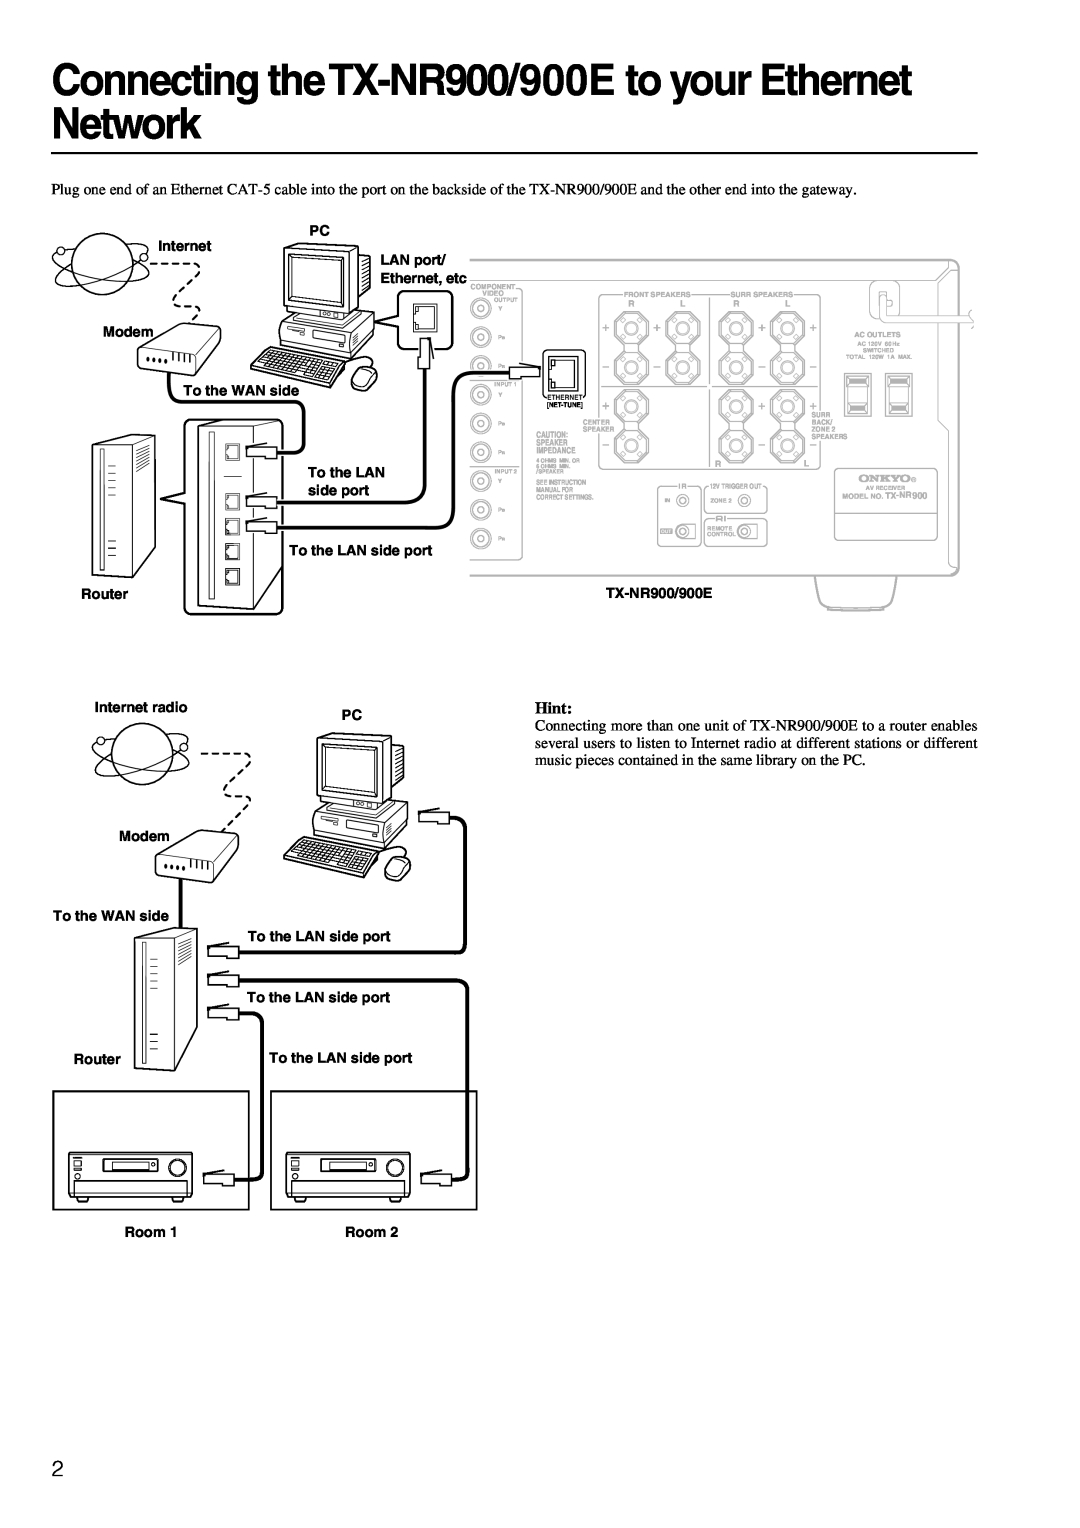 Onkyo TX-NR900E manual Hint, PC Internet LAN port Ethernet, etc Modem 